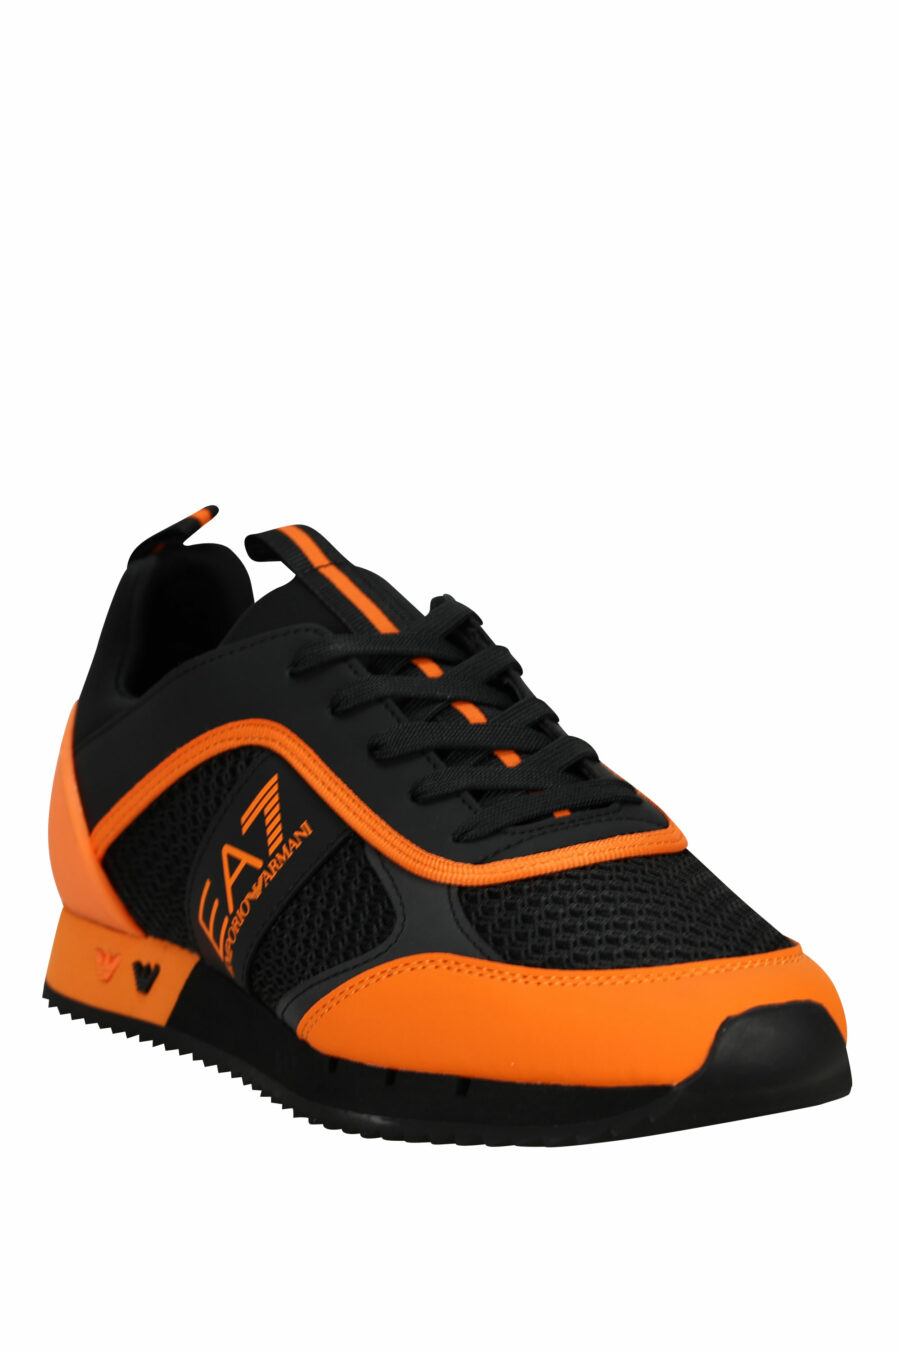 Zapatillas negras con logo "lux identity" naranja - 8057970798149 1